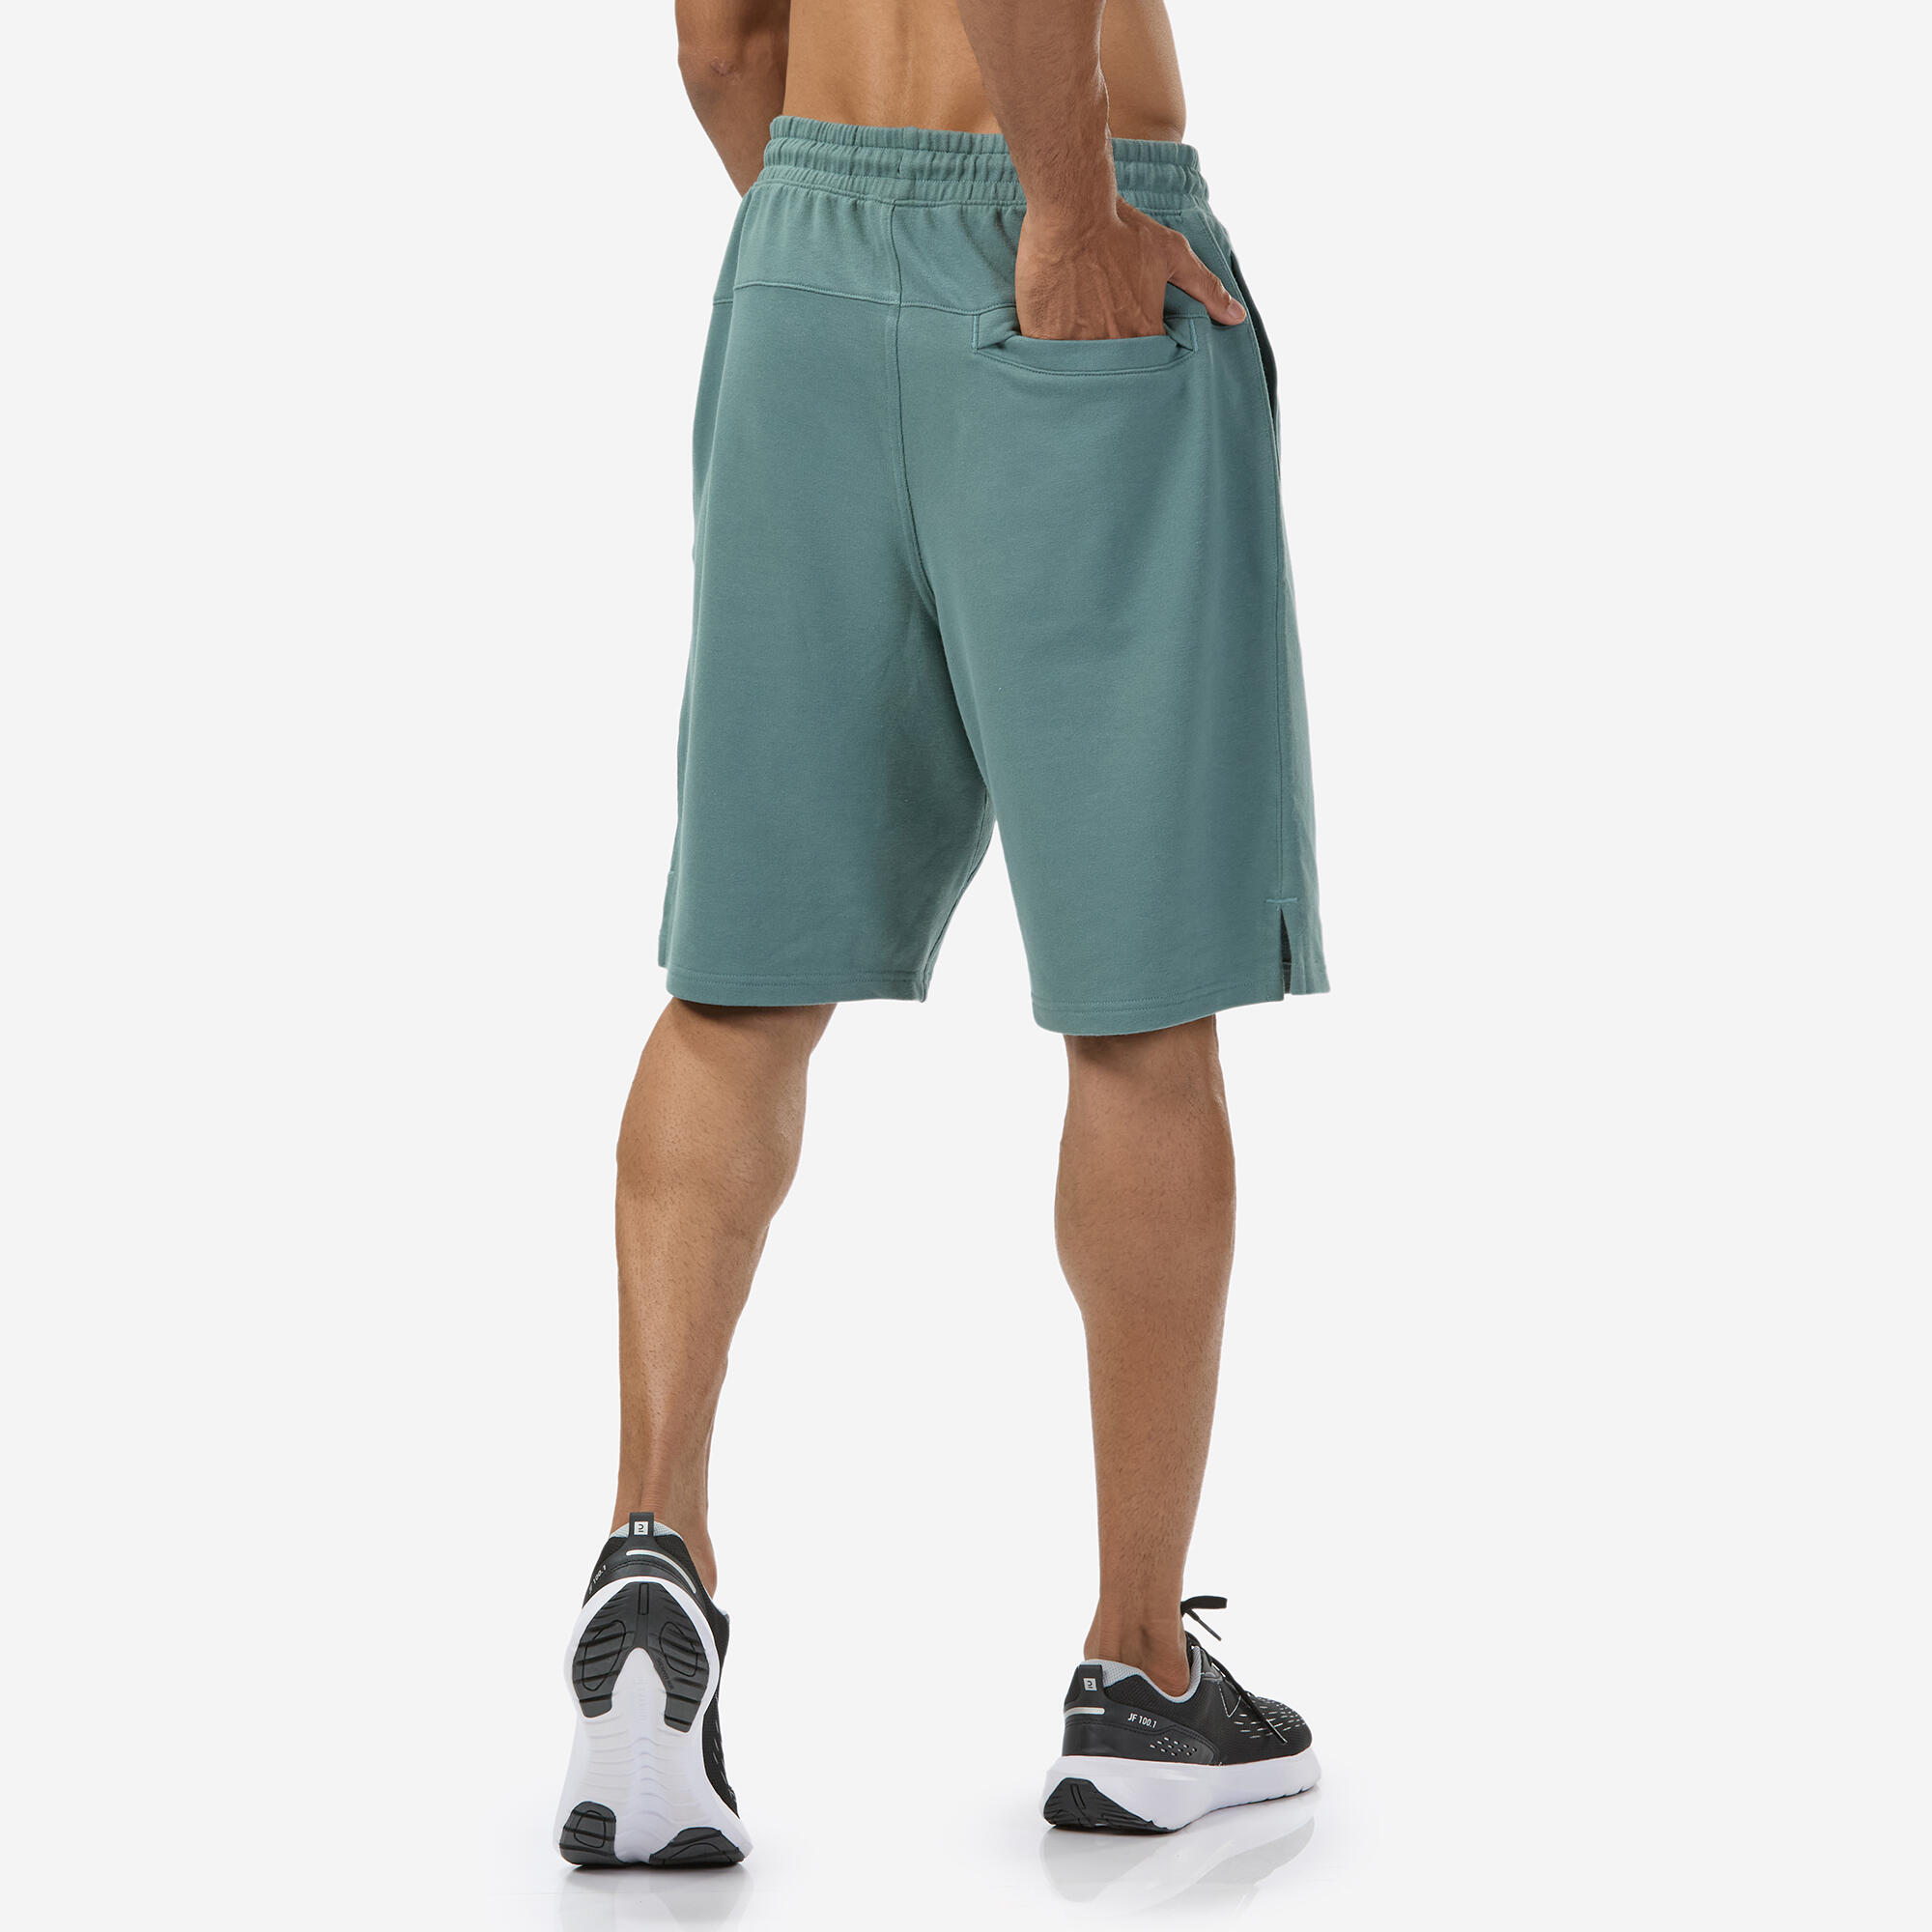 Men's Fitness Shorts - Frozen Cedar 3/7